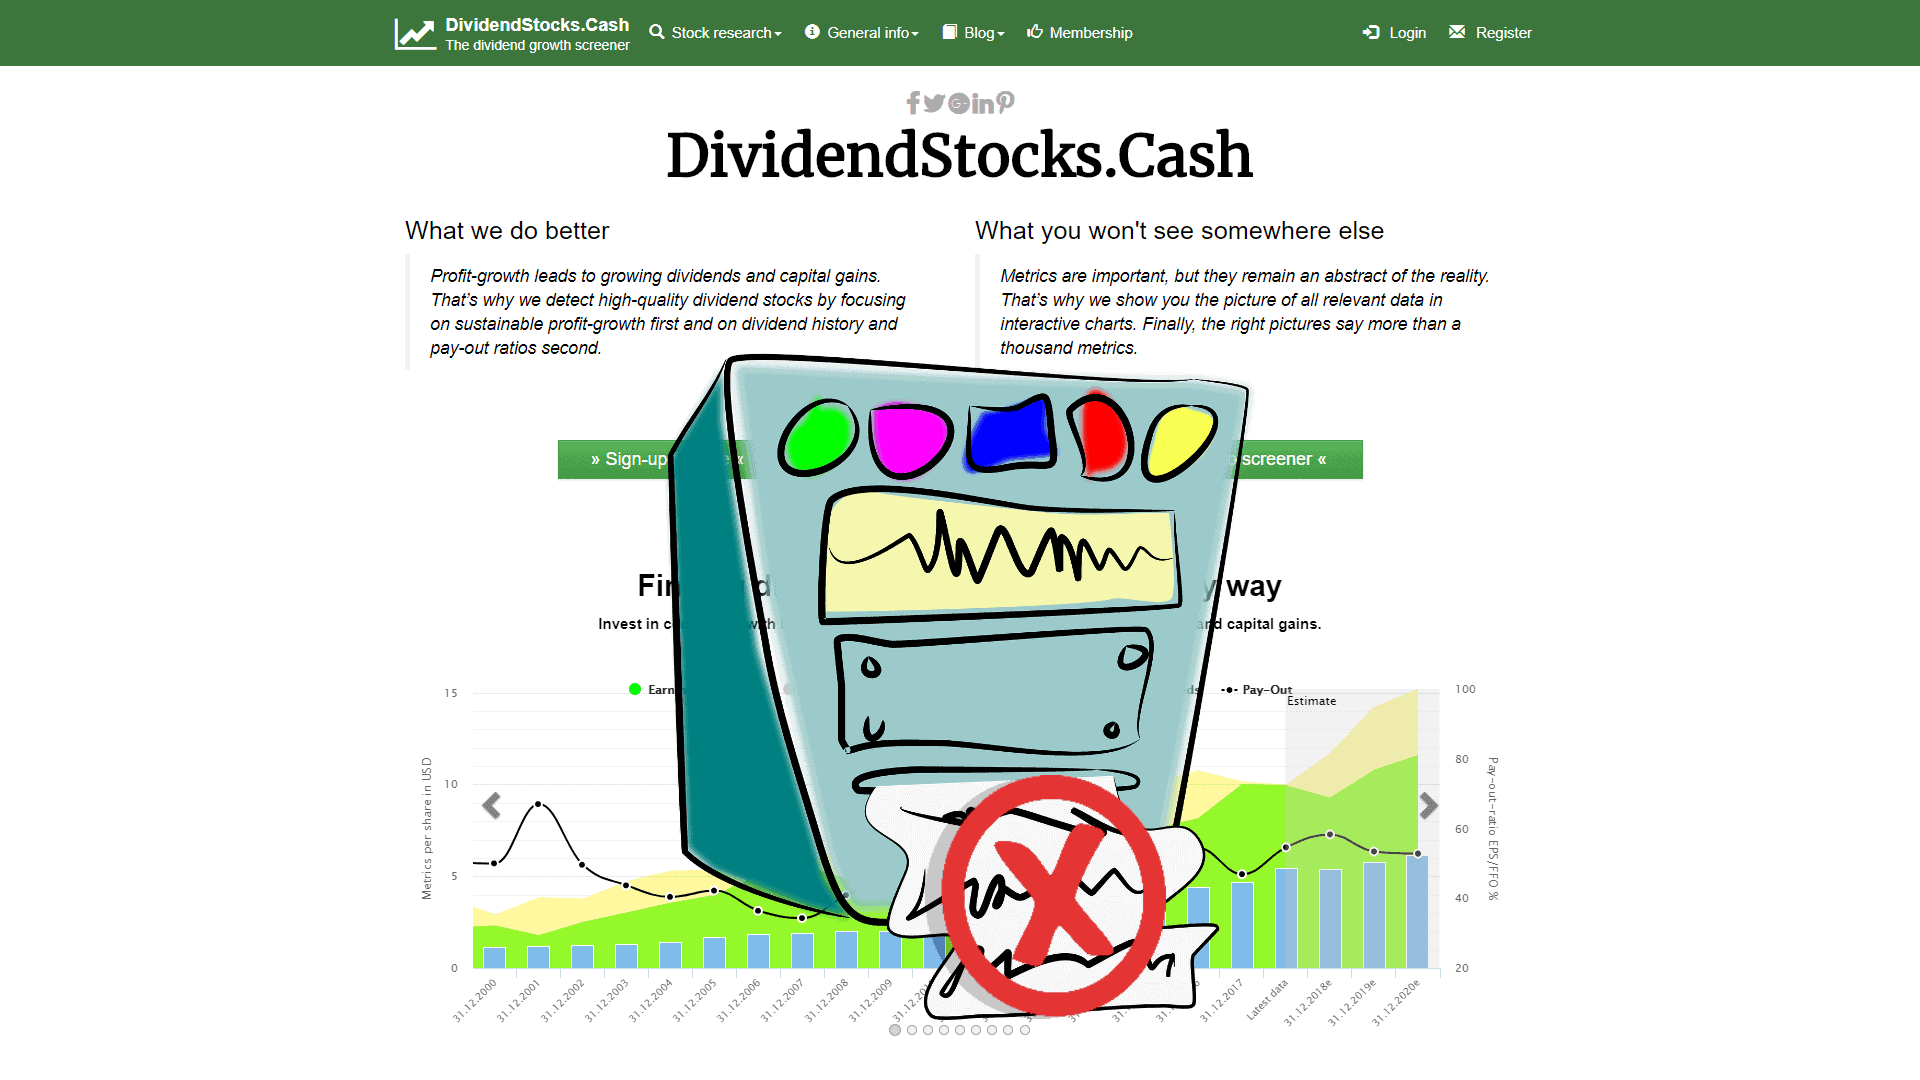 DividendStocksCash Badly Calculated Metrics